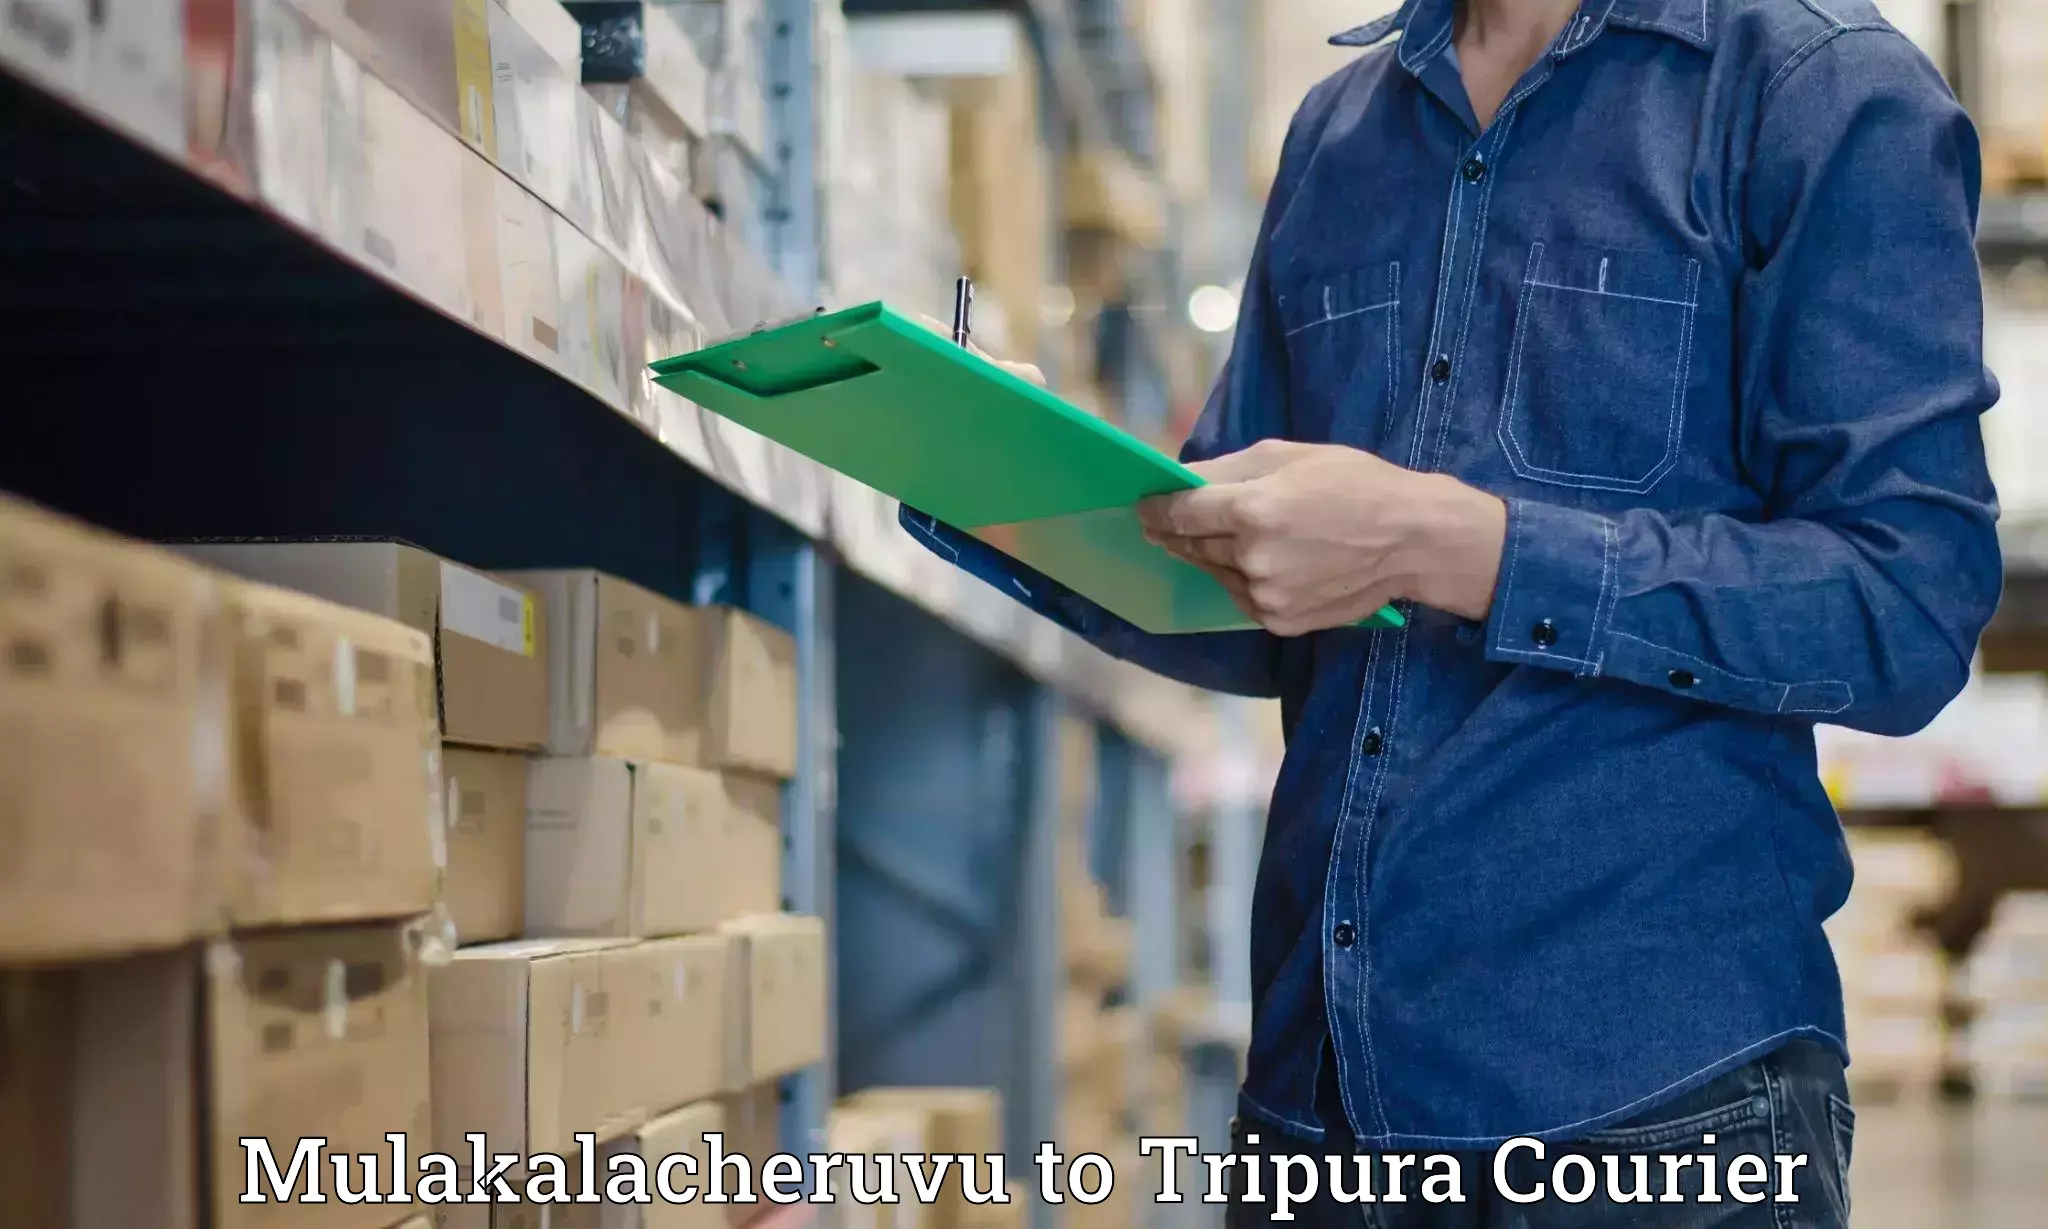 Affordable parcel service Mulakalacheruvu to West Tripura